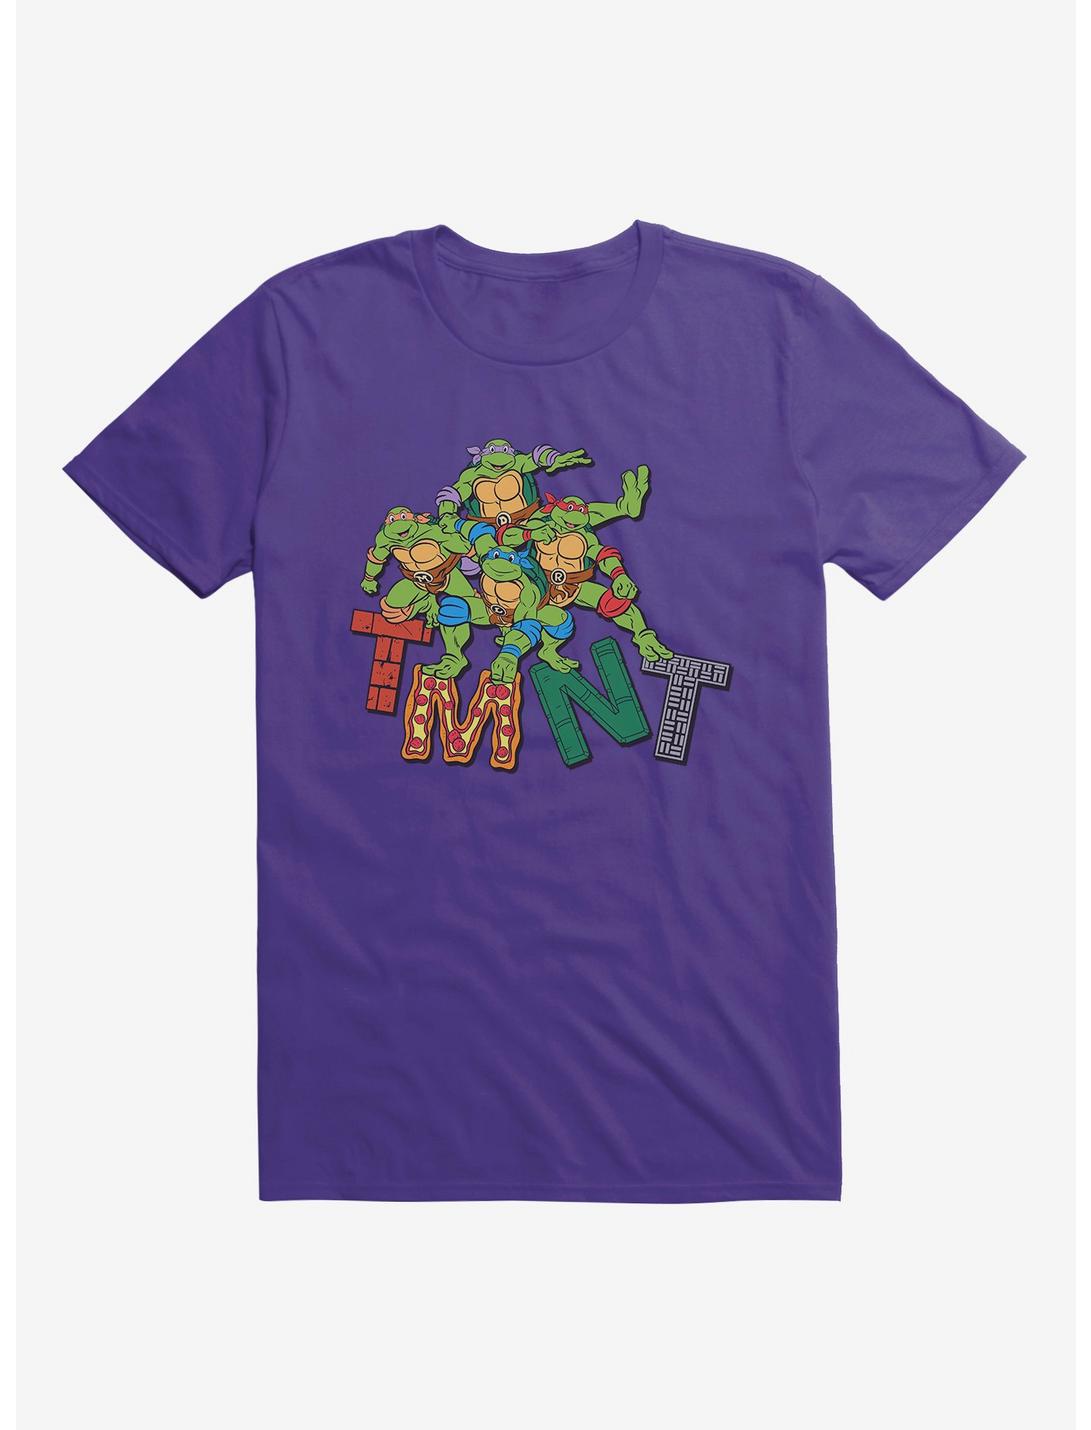 Teenage Mutant Ninja Turtles Patterned Logo Letters Group Purple T-Shirt, PURPLE RUSH, hi-res